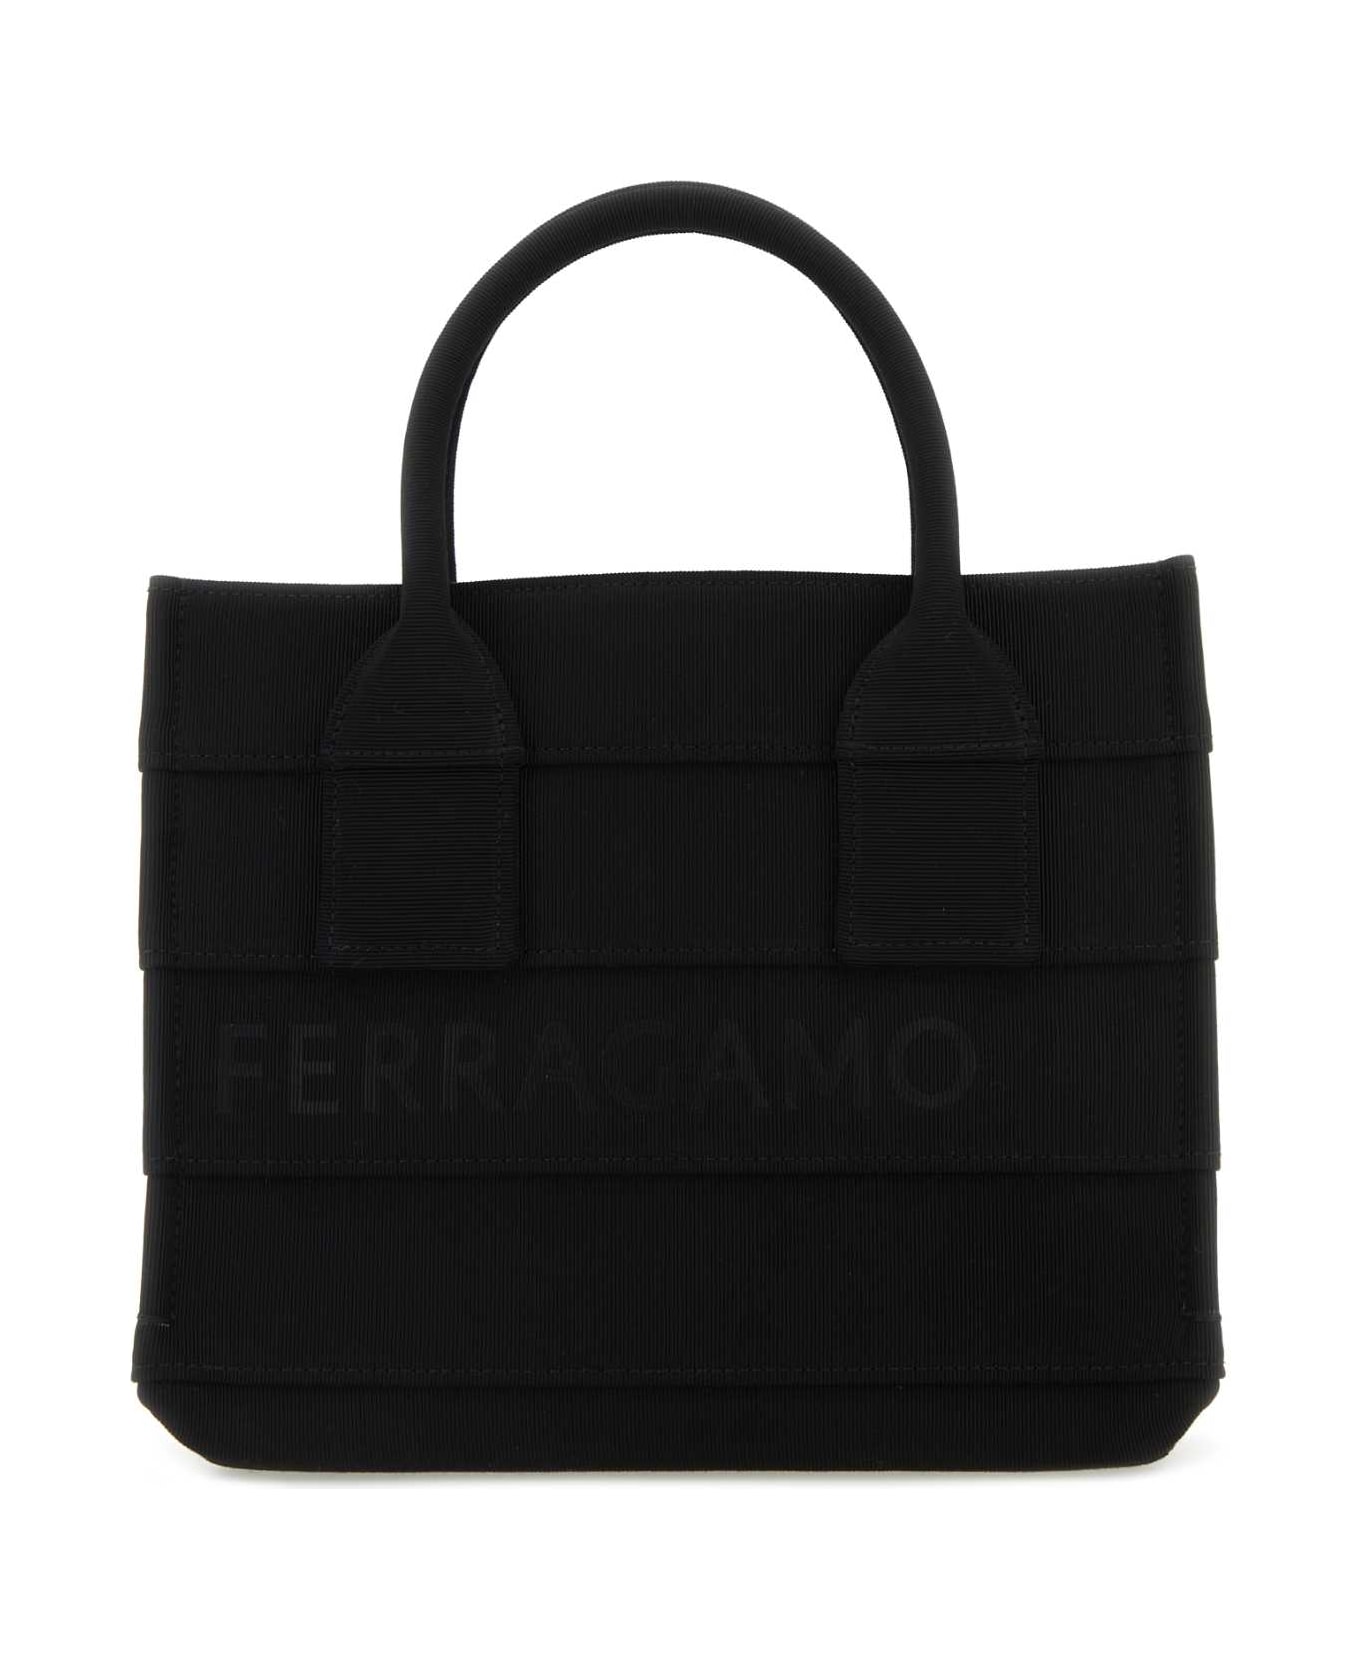 Ferragamo Black Fabric Beach S Handbag - NERO